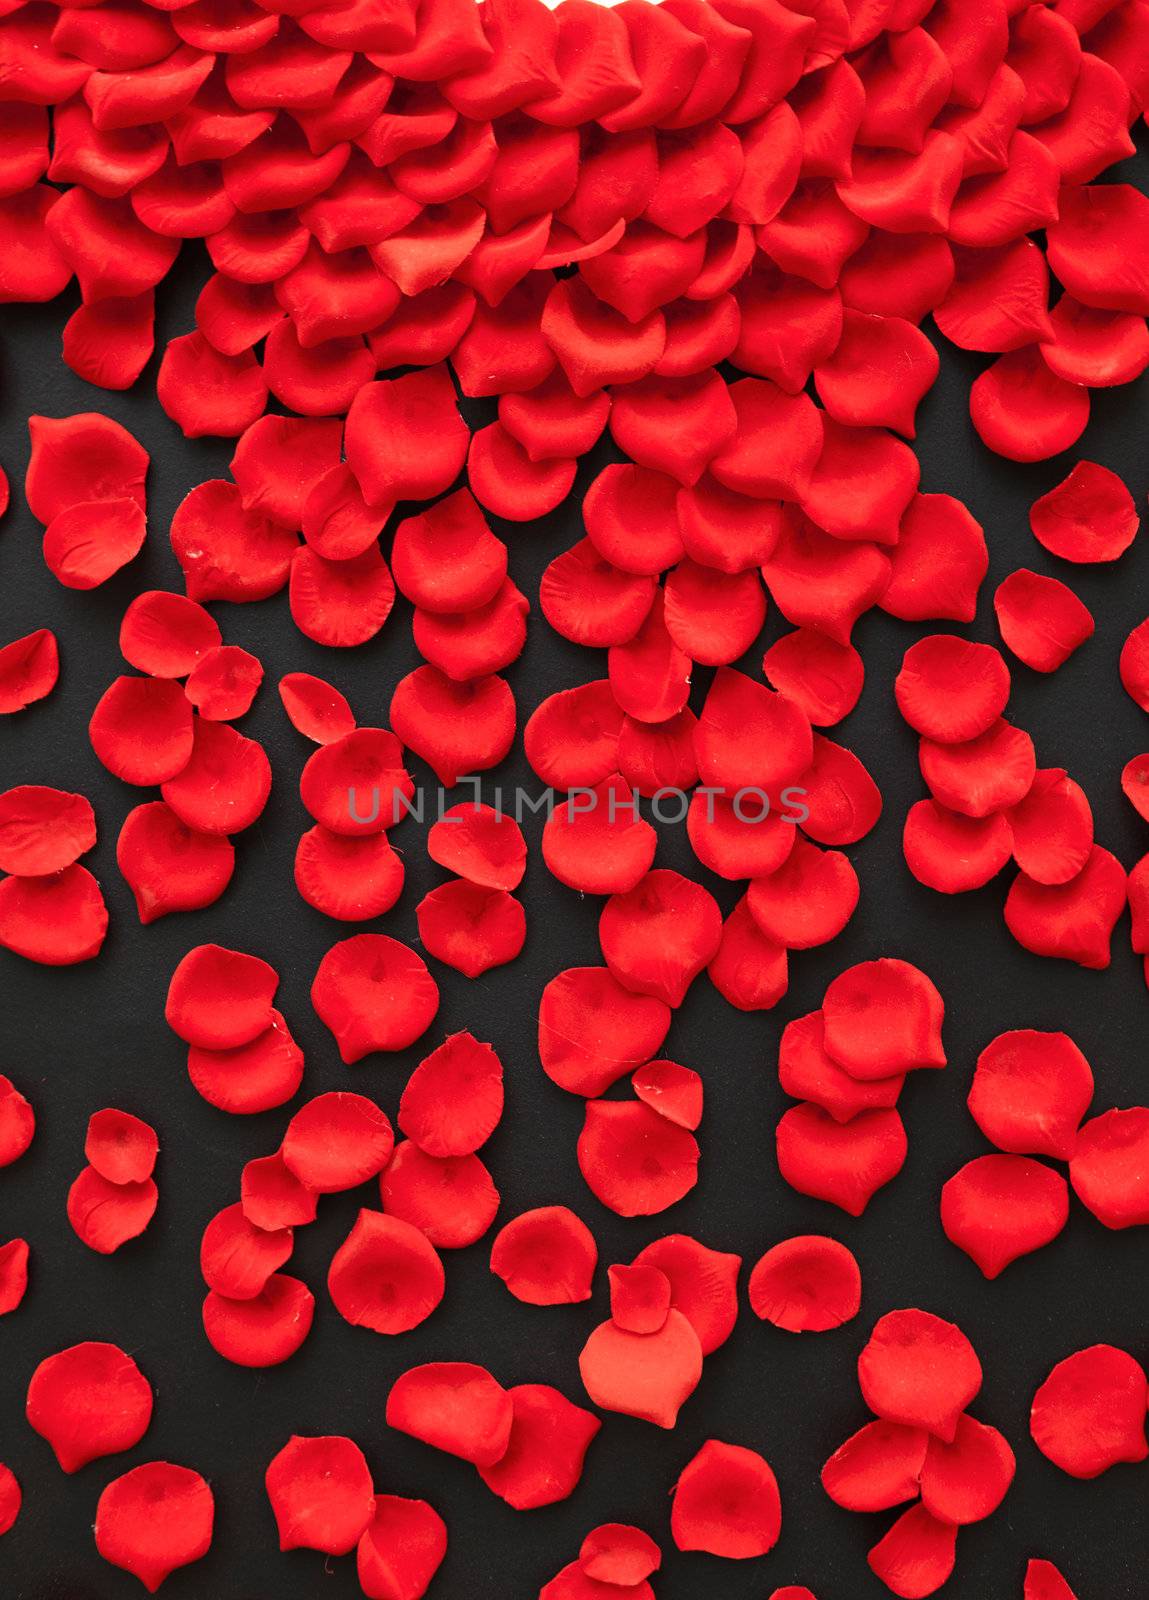 Red rose petals by gilmanshin